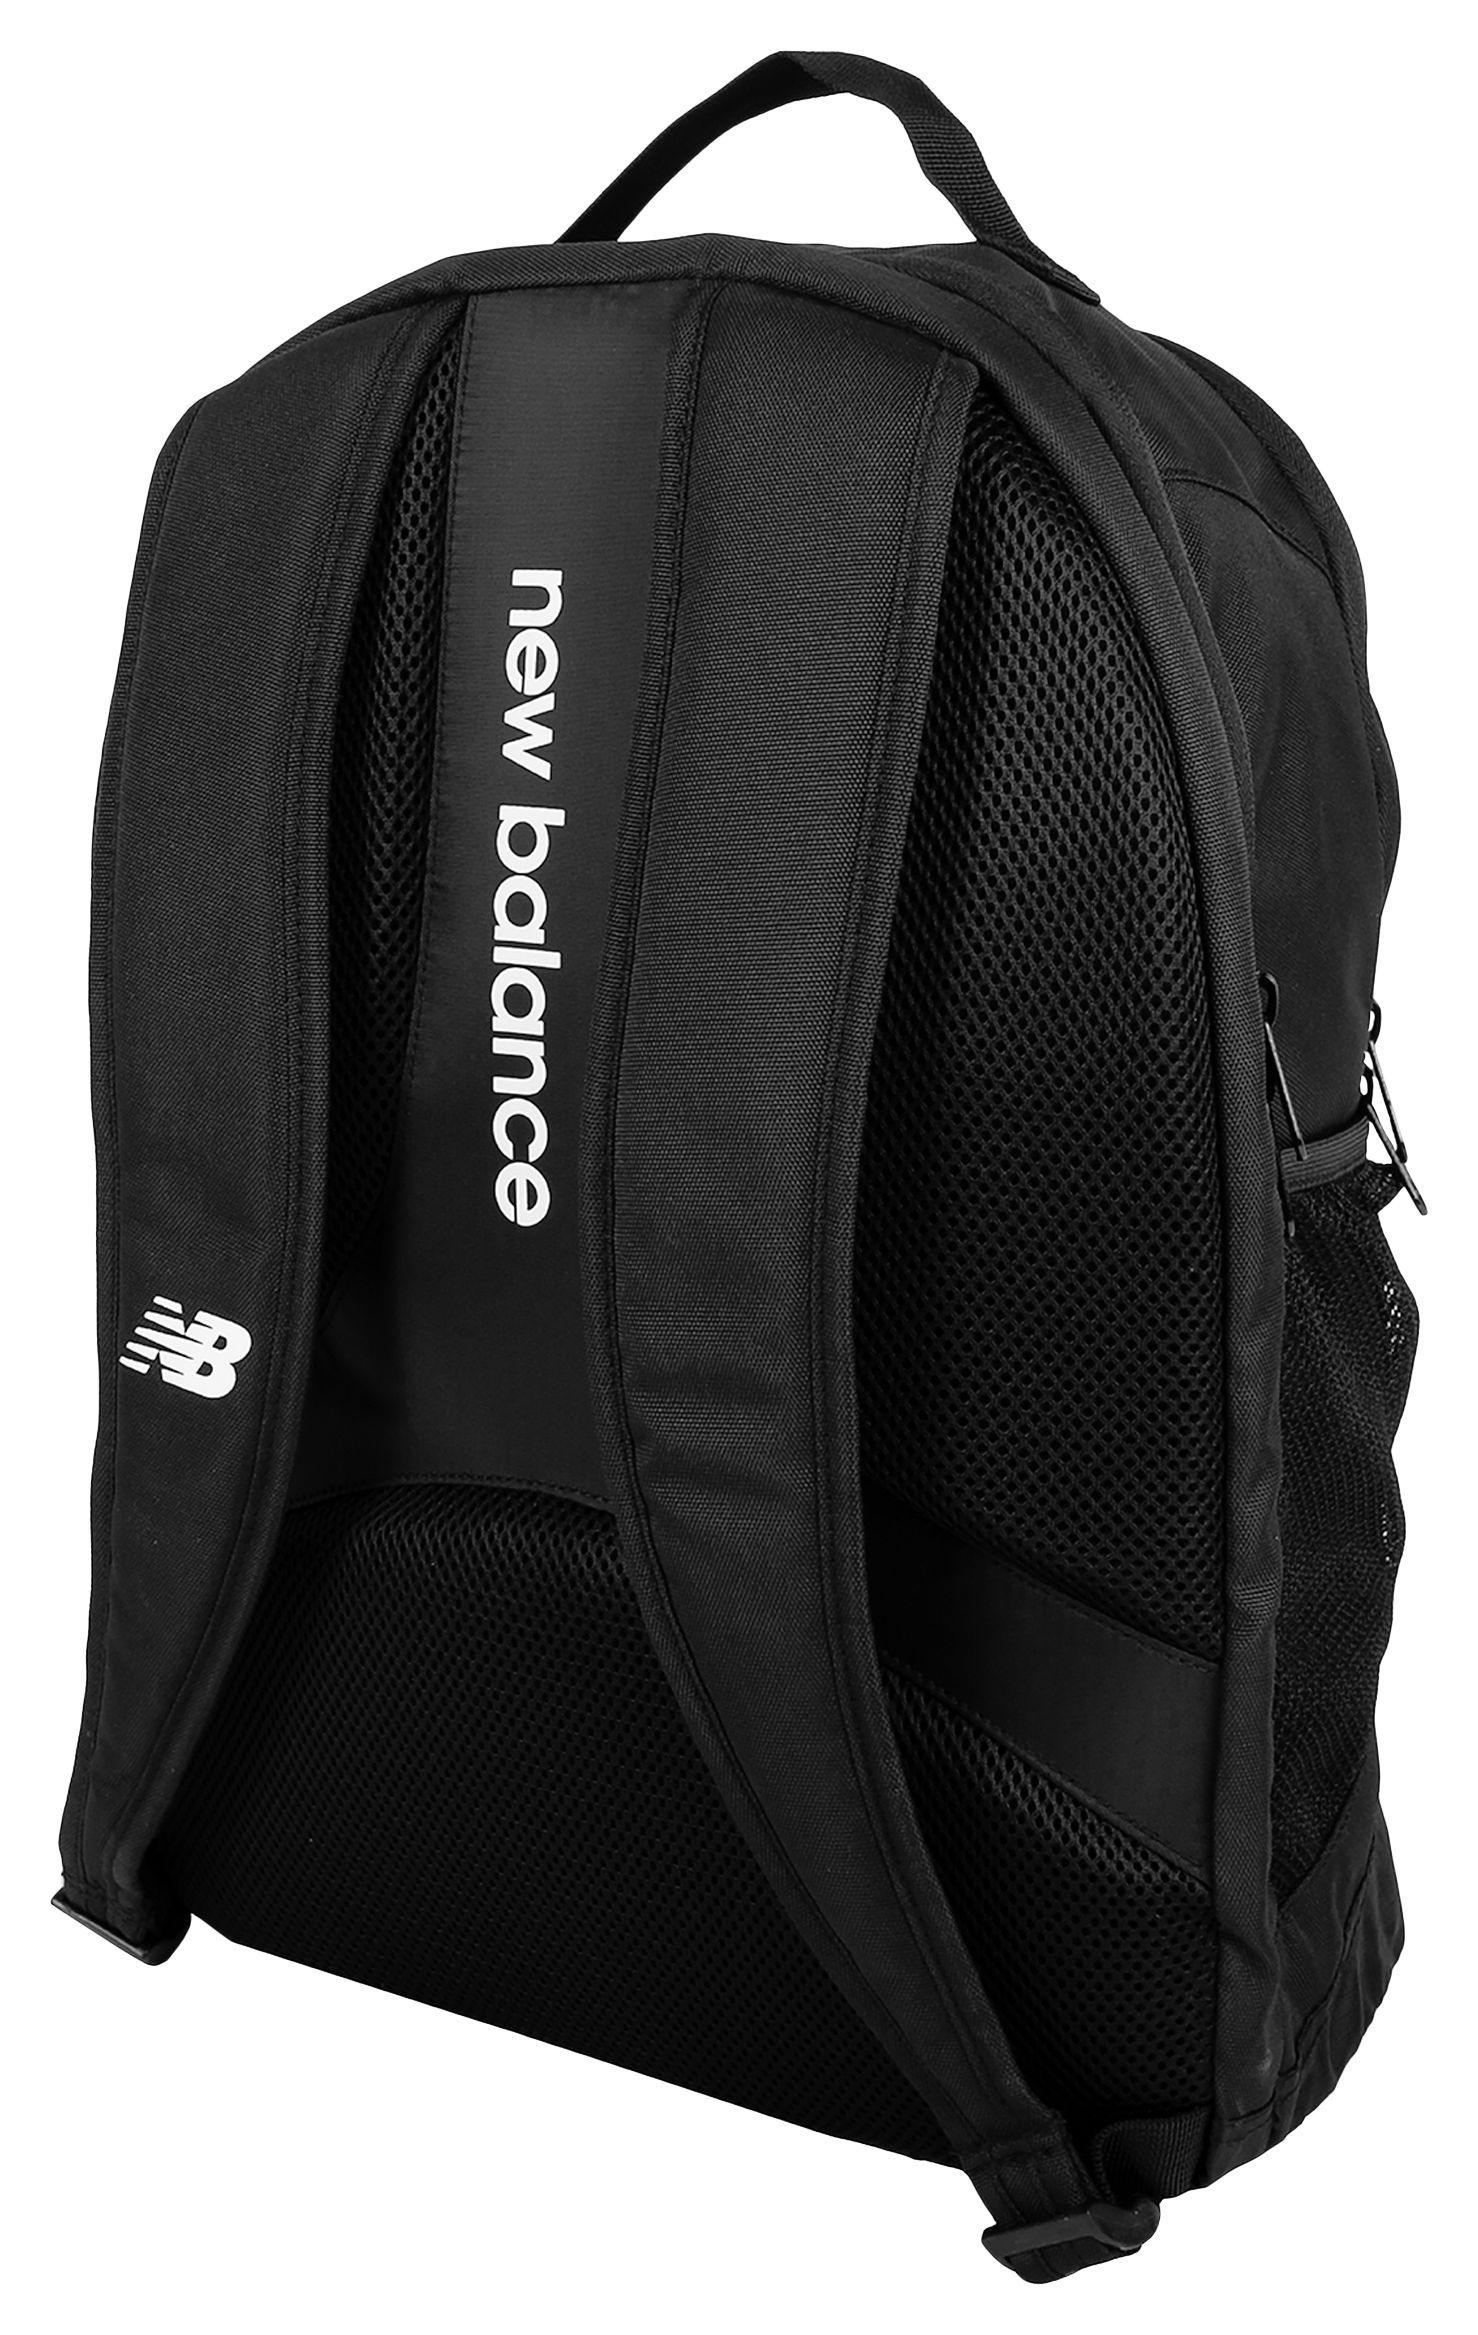 new balance laptop backpack